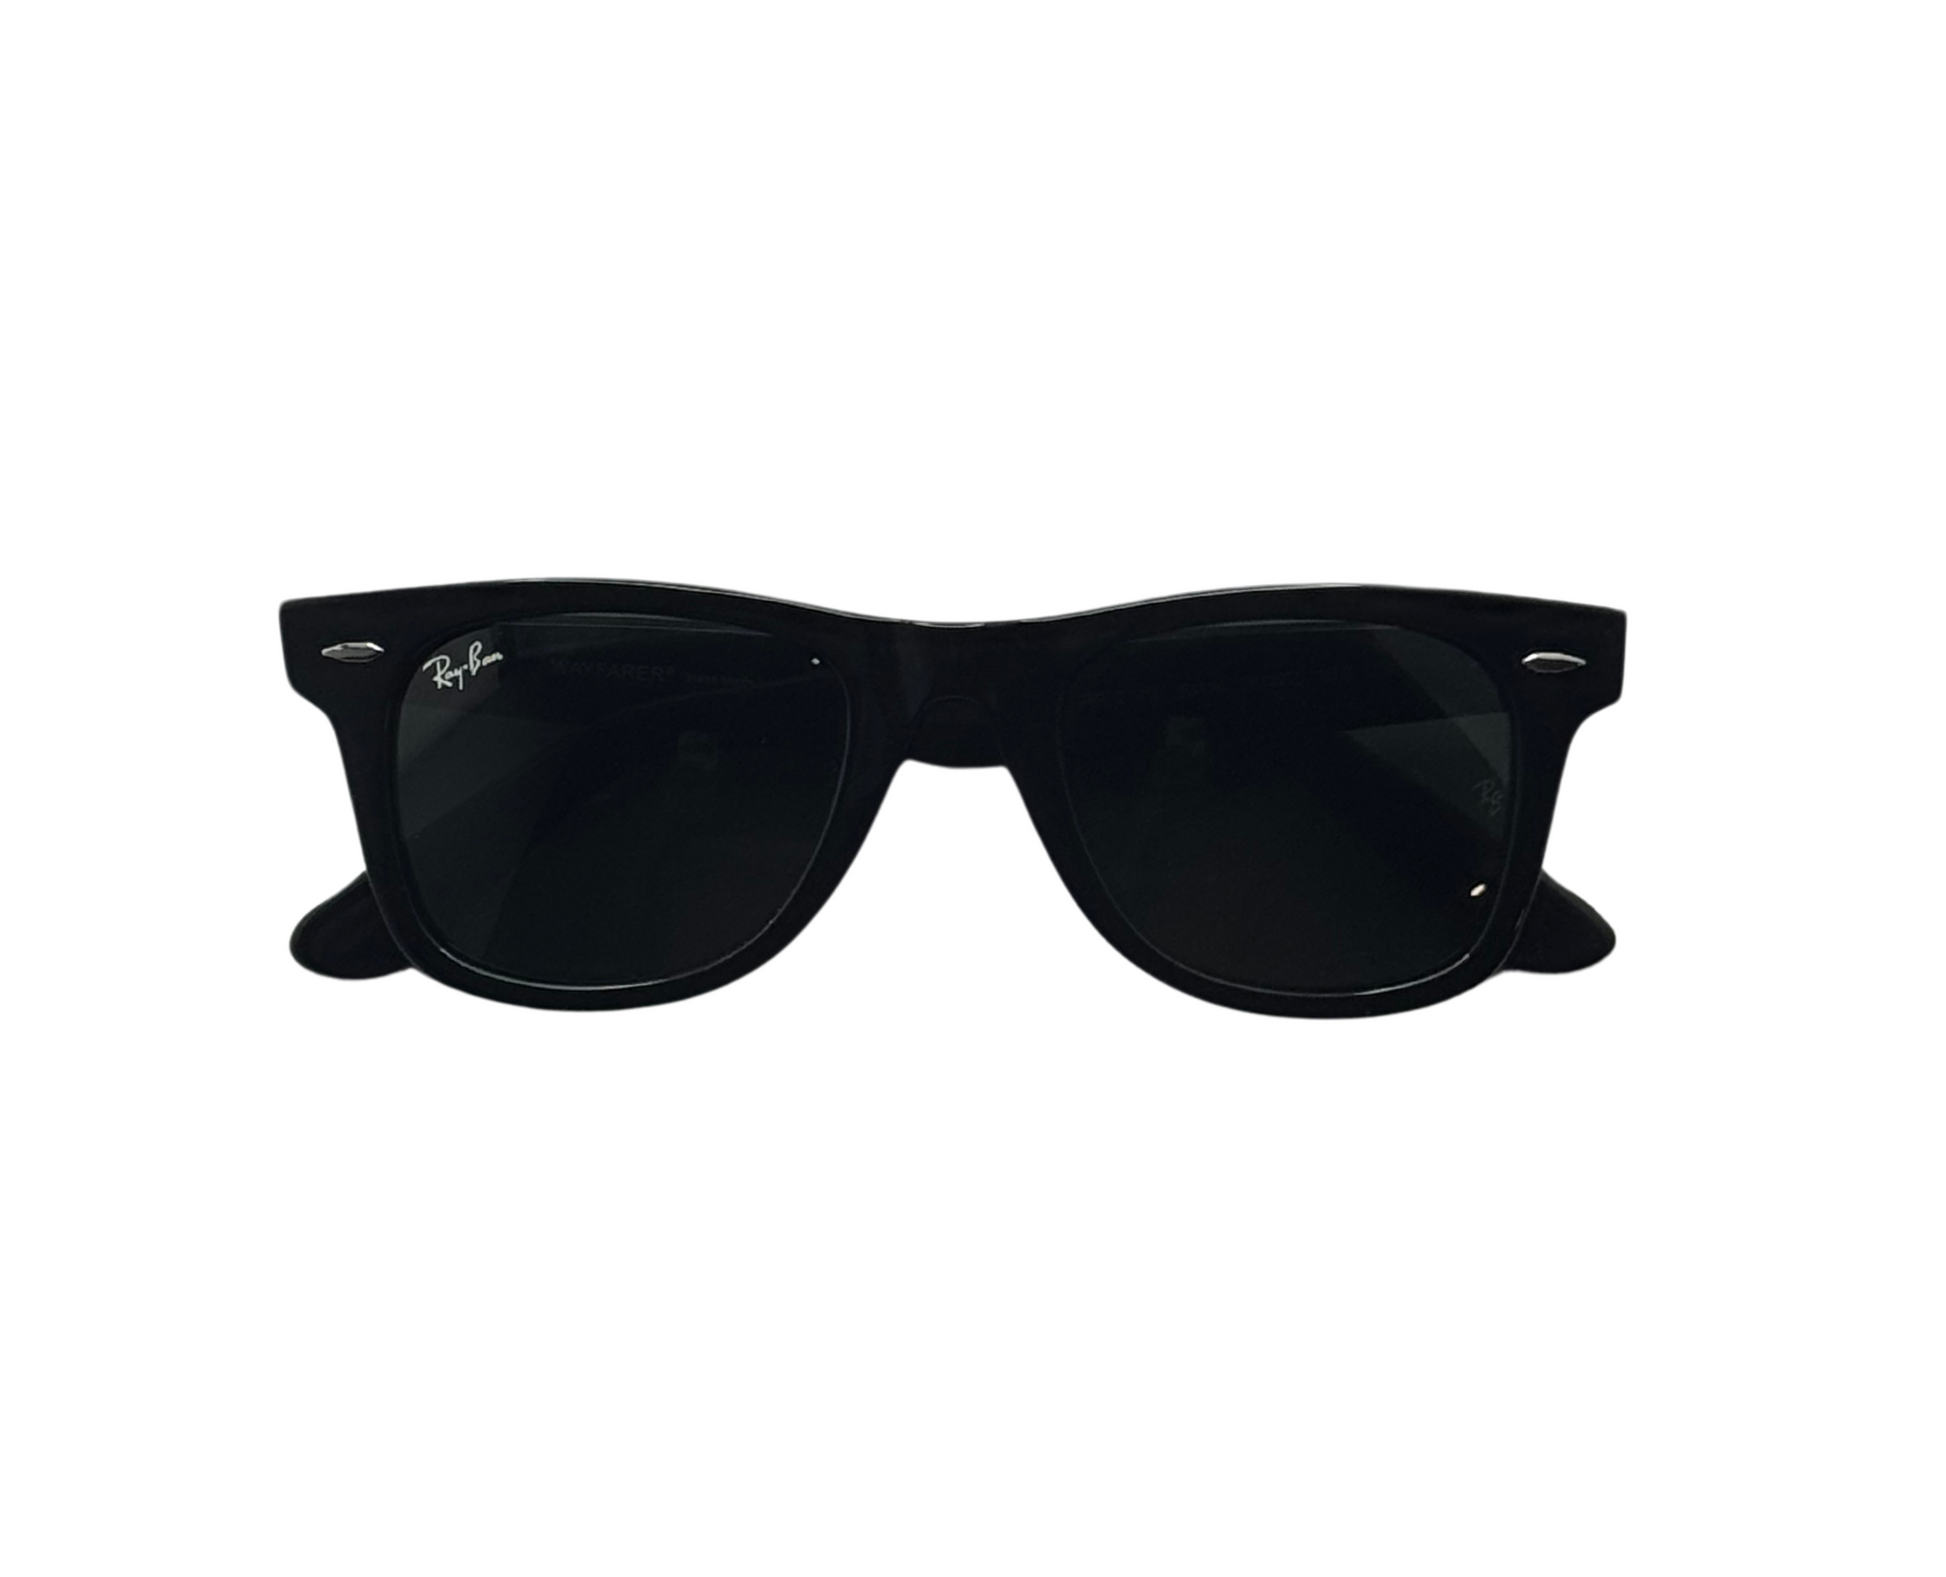 NS Luxury - 2140 - 901 - Sunglasses